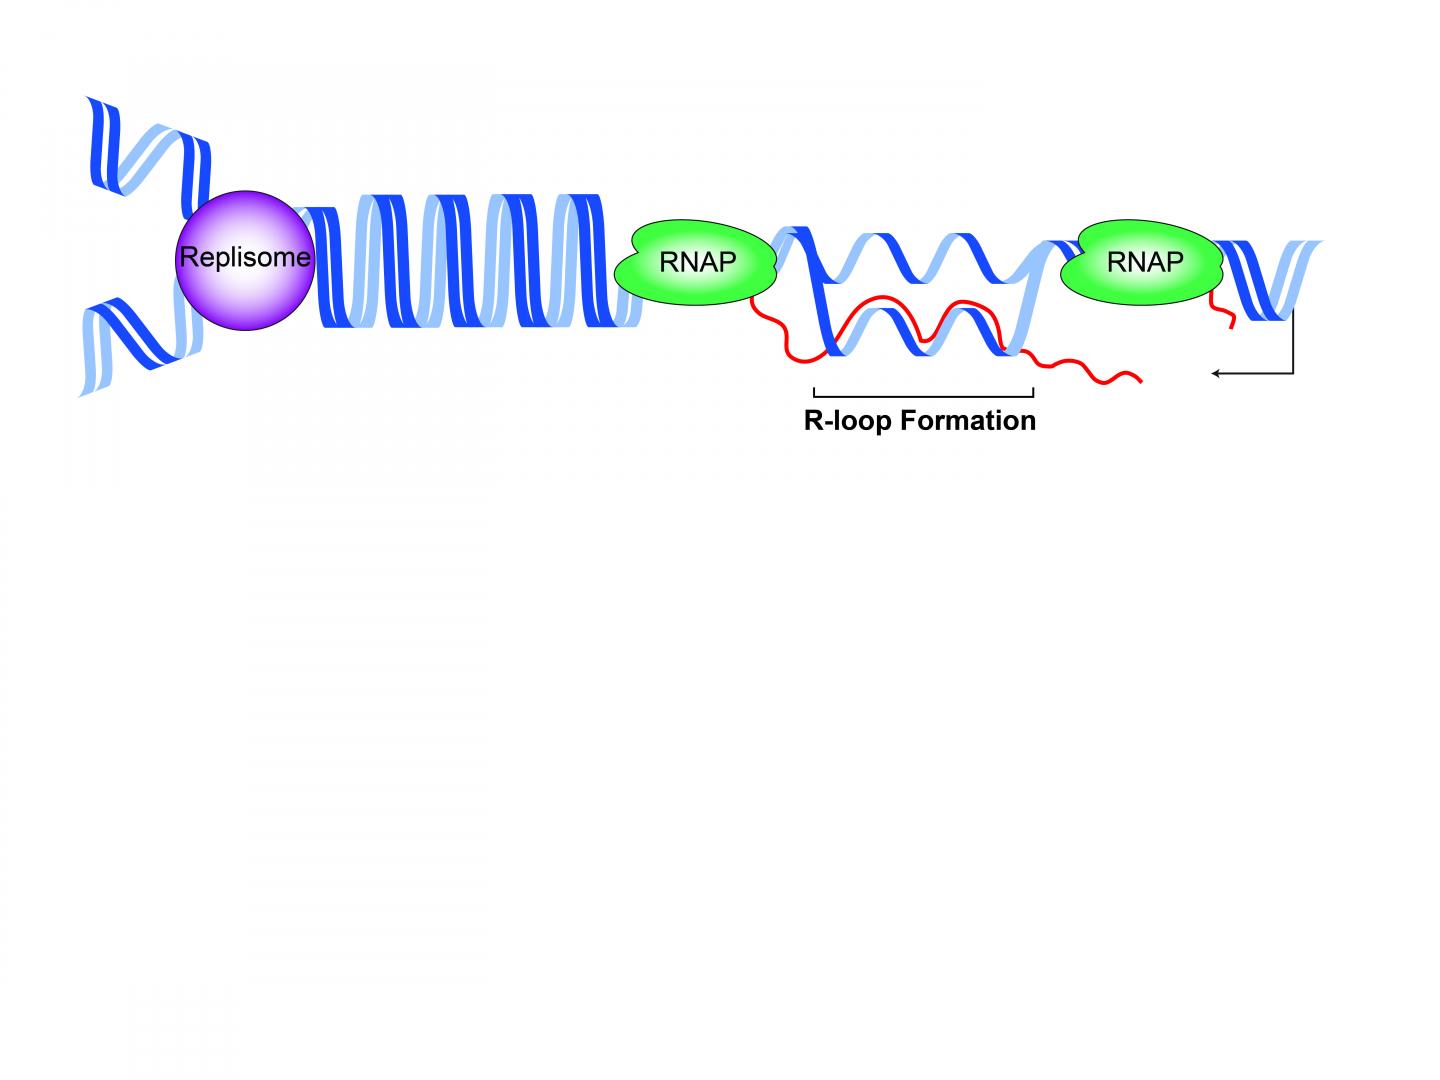 R-loop Formation During DNA Transcription